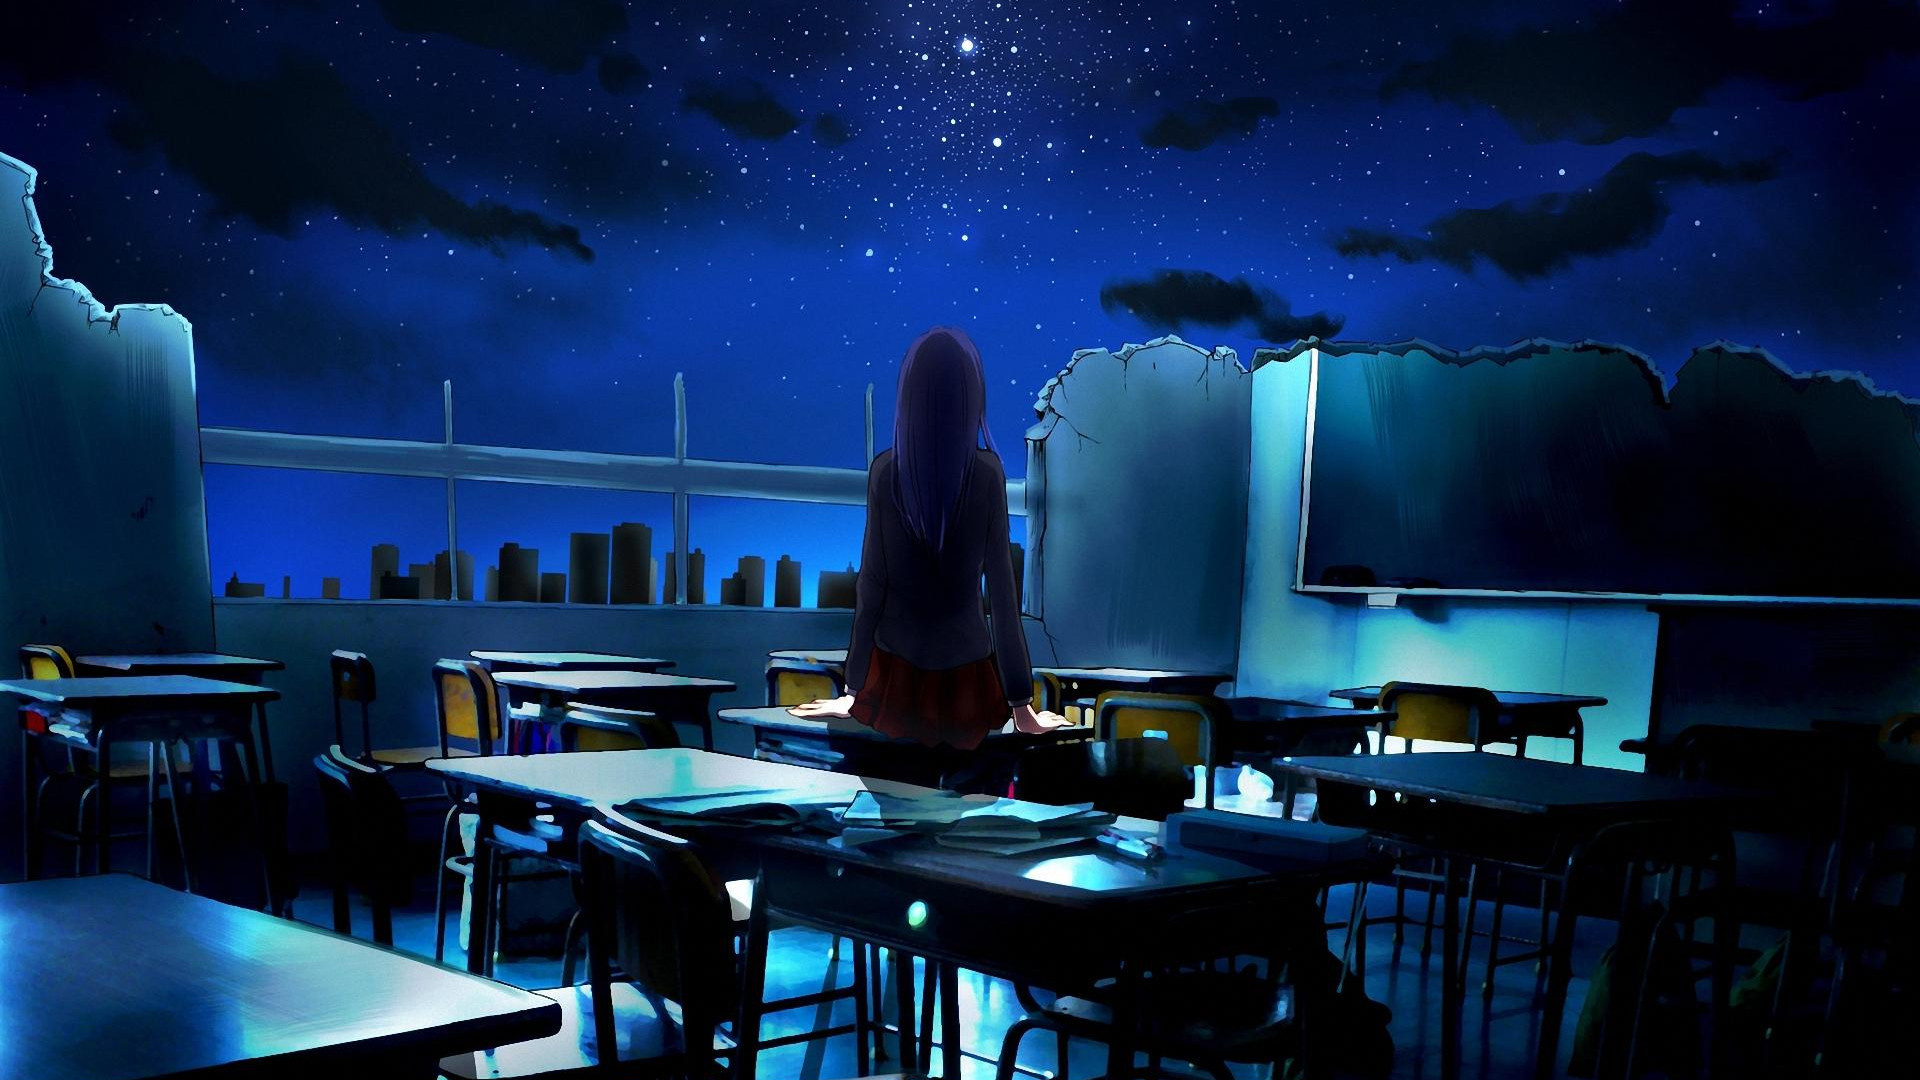 Download wallpaper 1920x1200 open, classroom, anime girl, night, original,  16:10 widescreen 1920x1200 hd background, 8801